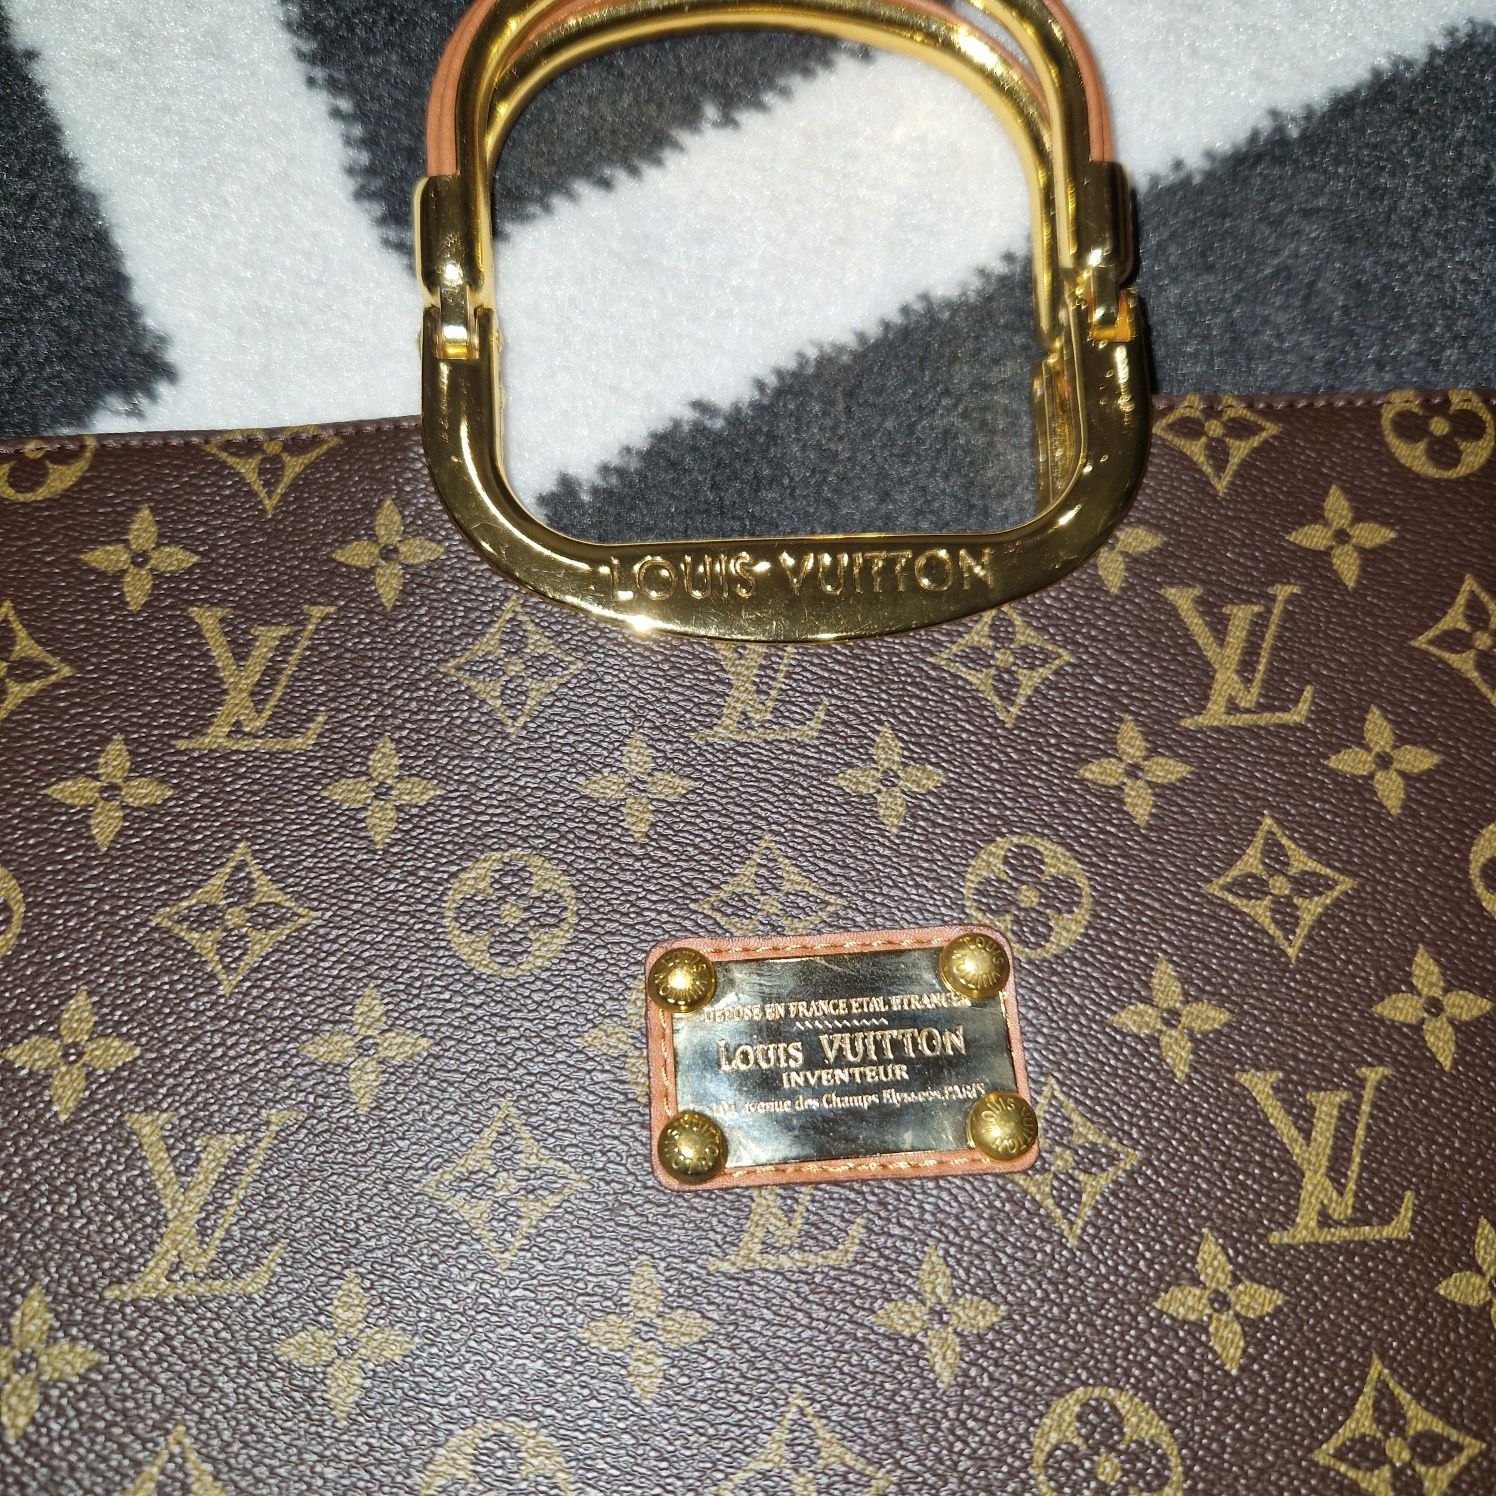 Louis Vuitton klasyczna brązowa elegancka torebka